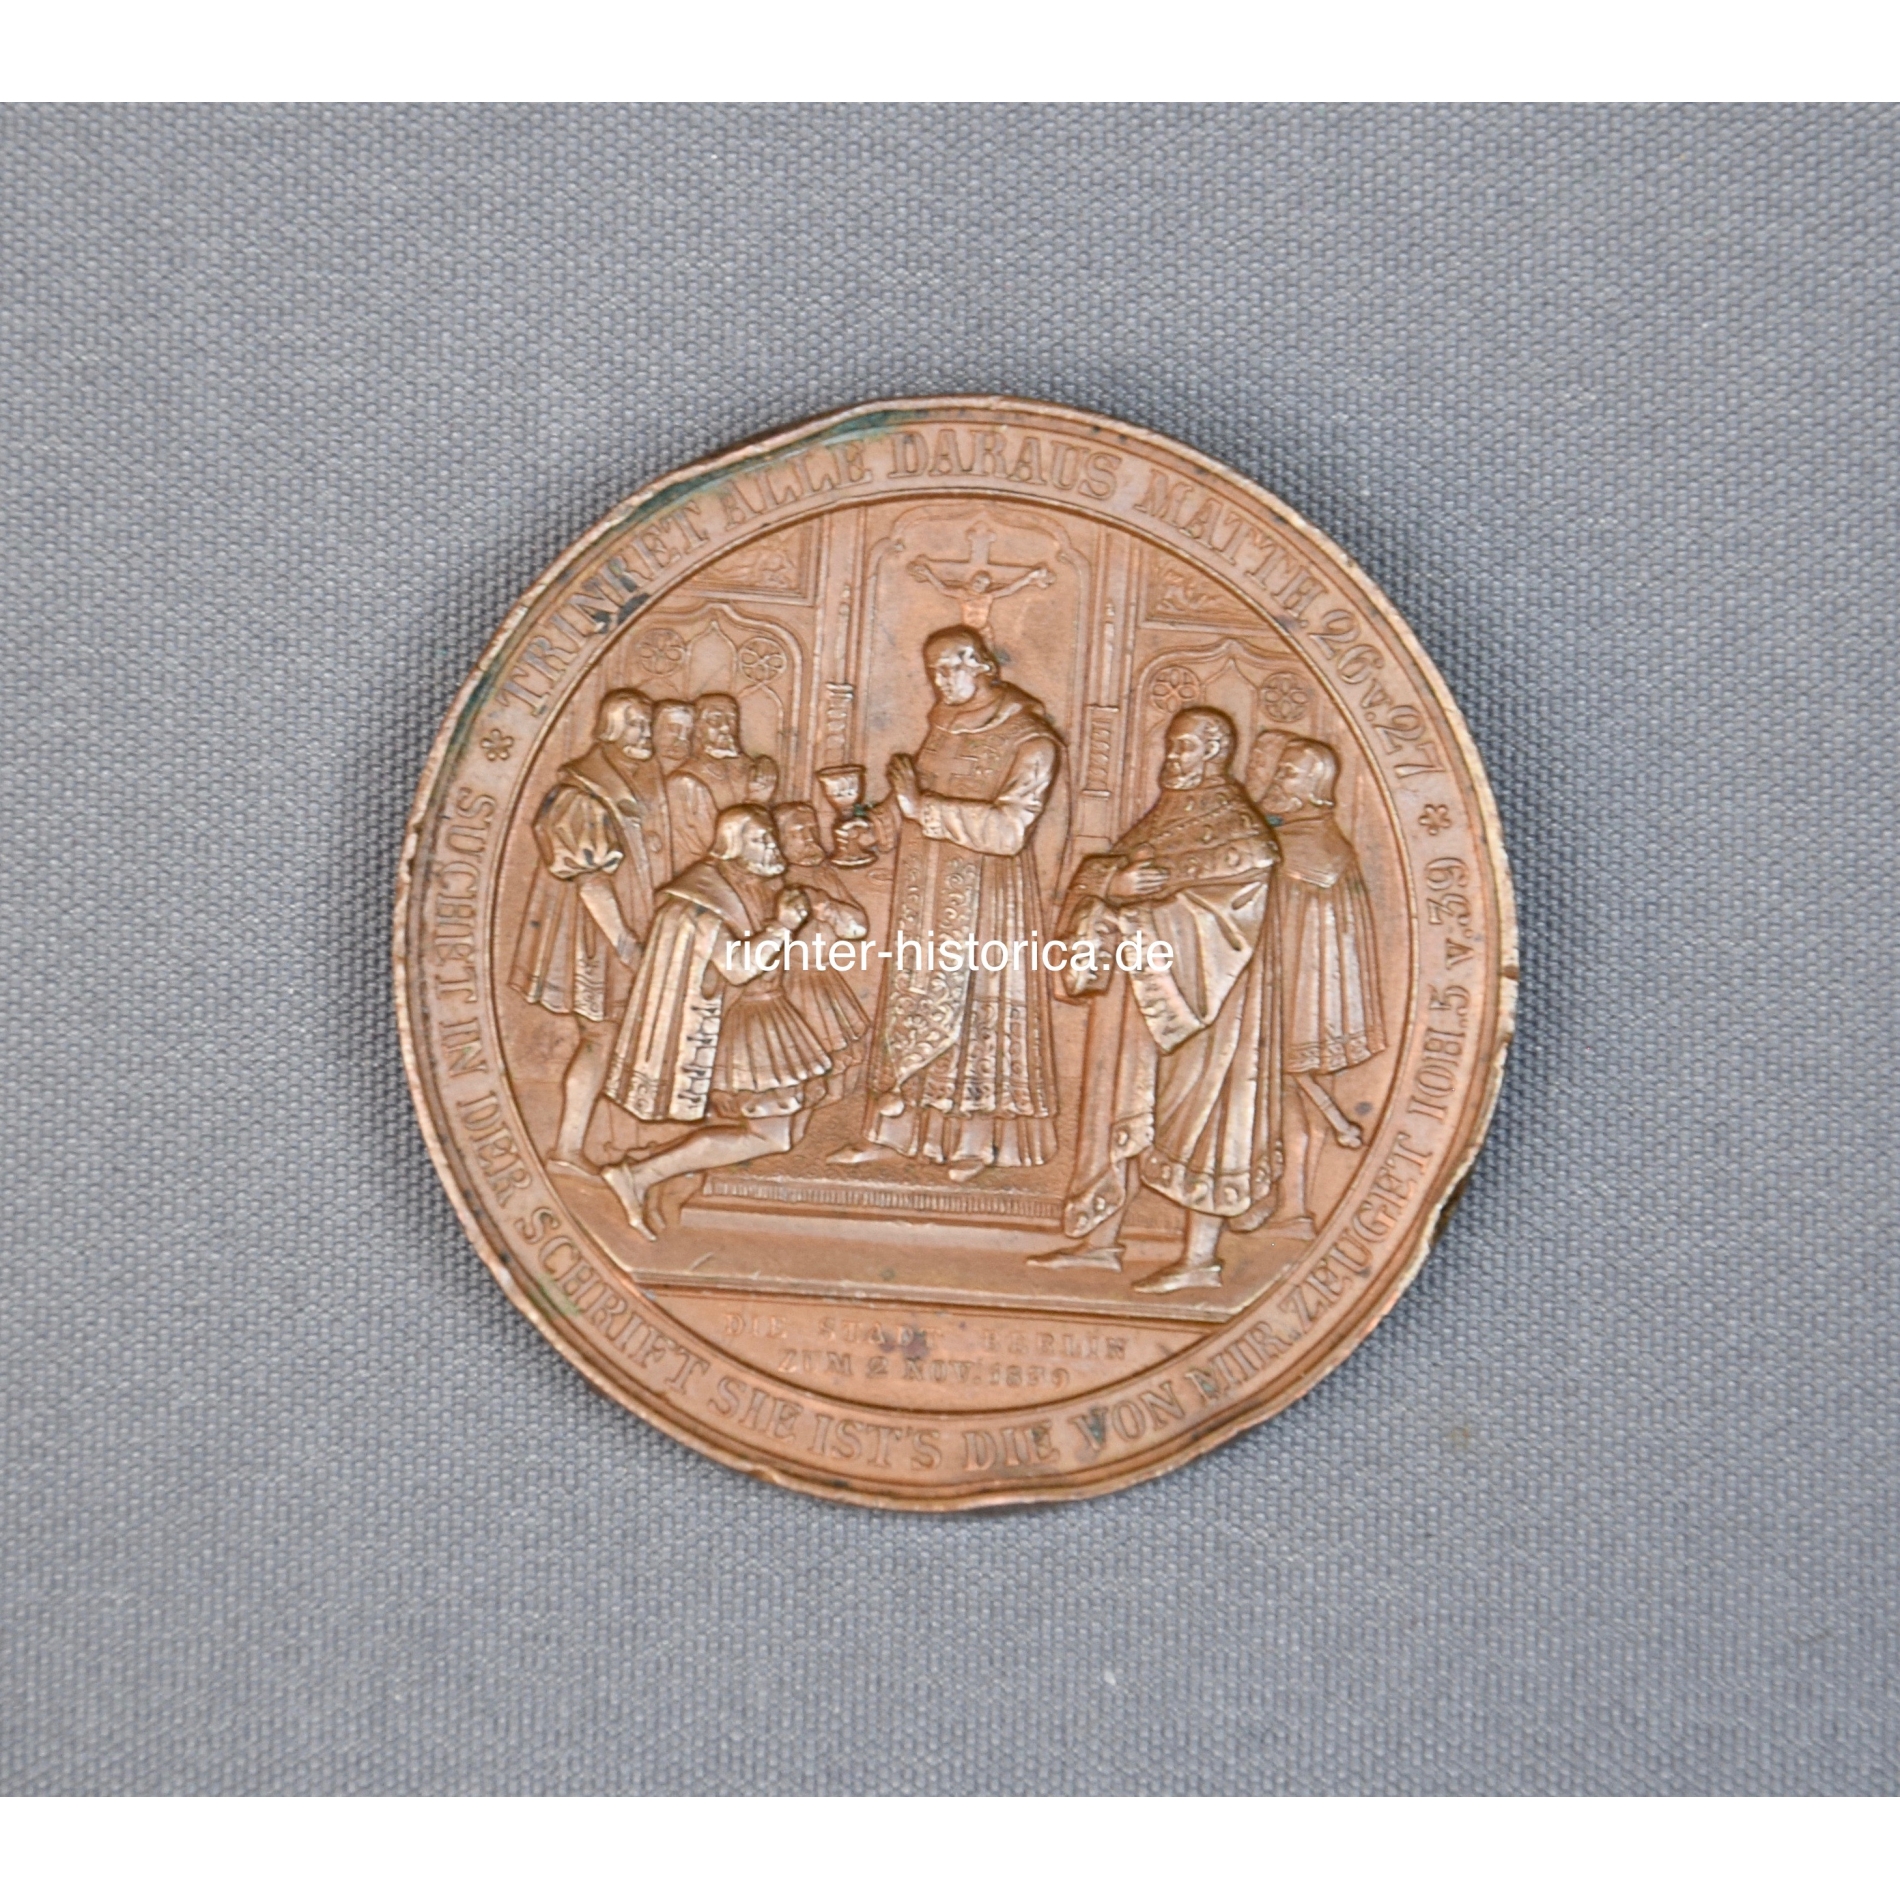 Massive Medaille Bronze Kurfürst Joachim II.König Friedrich Wilhelm III 1839